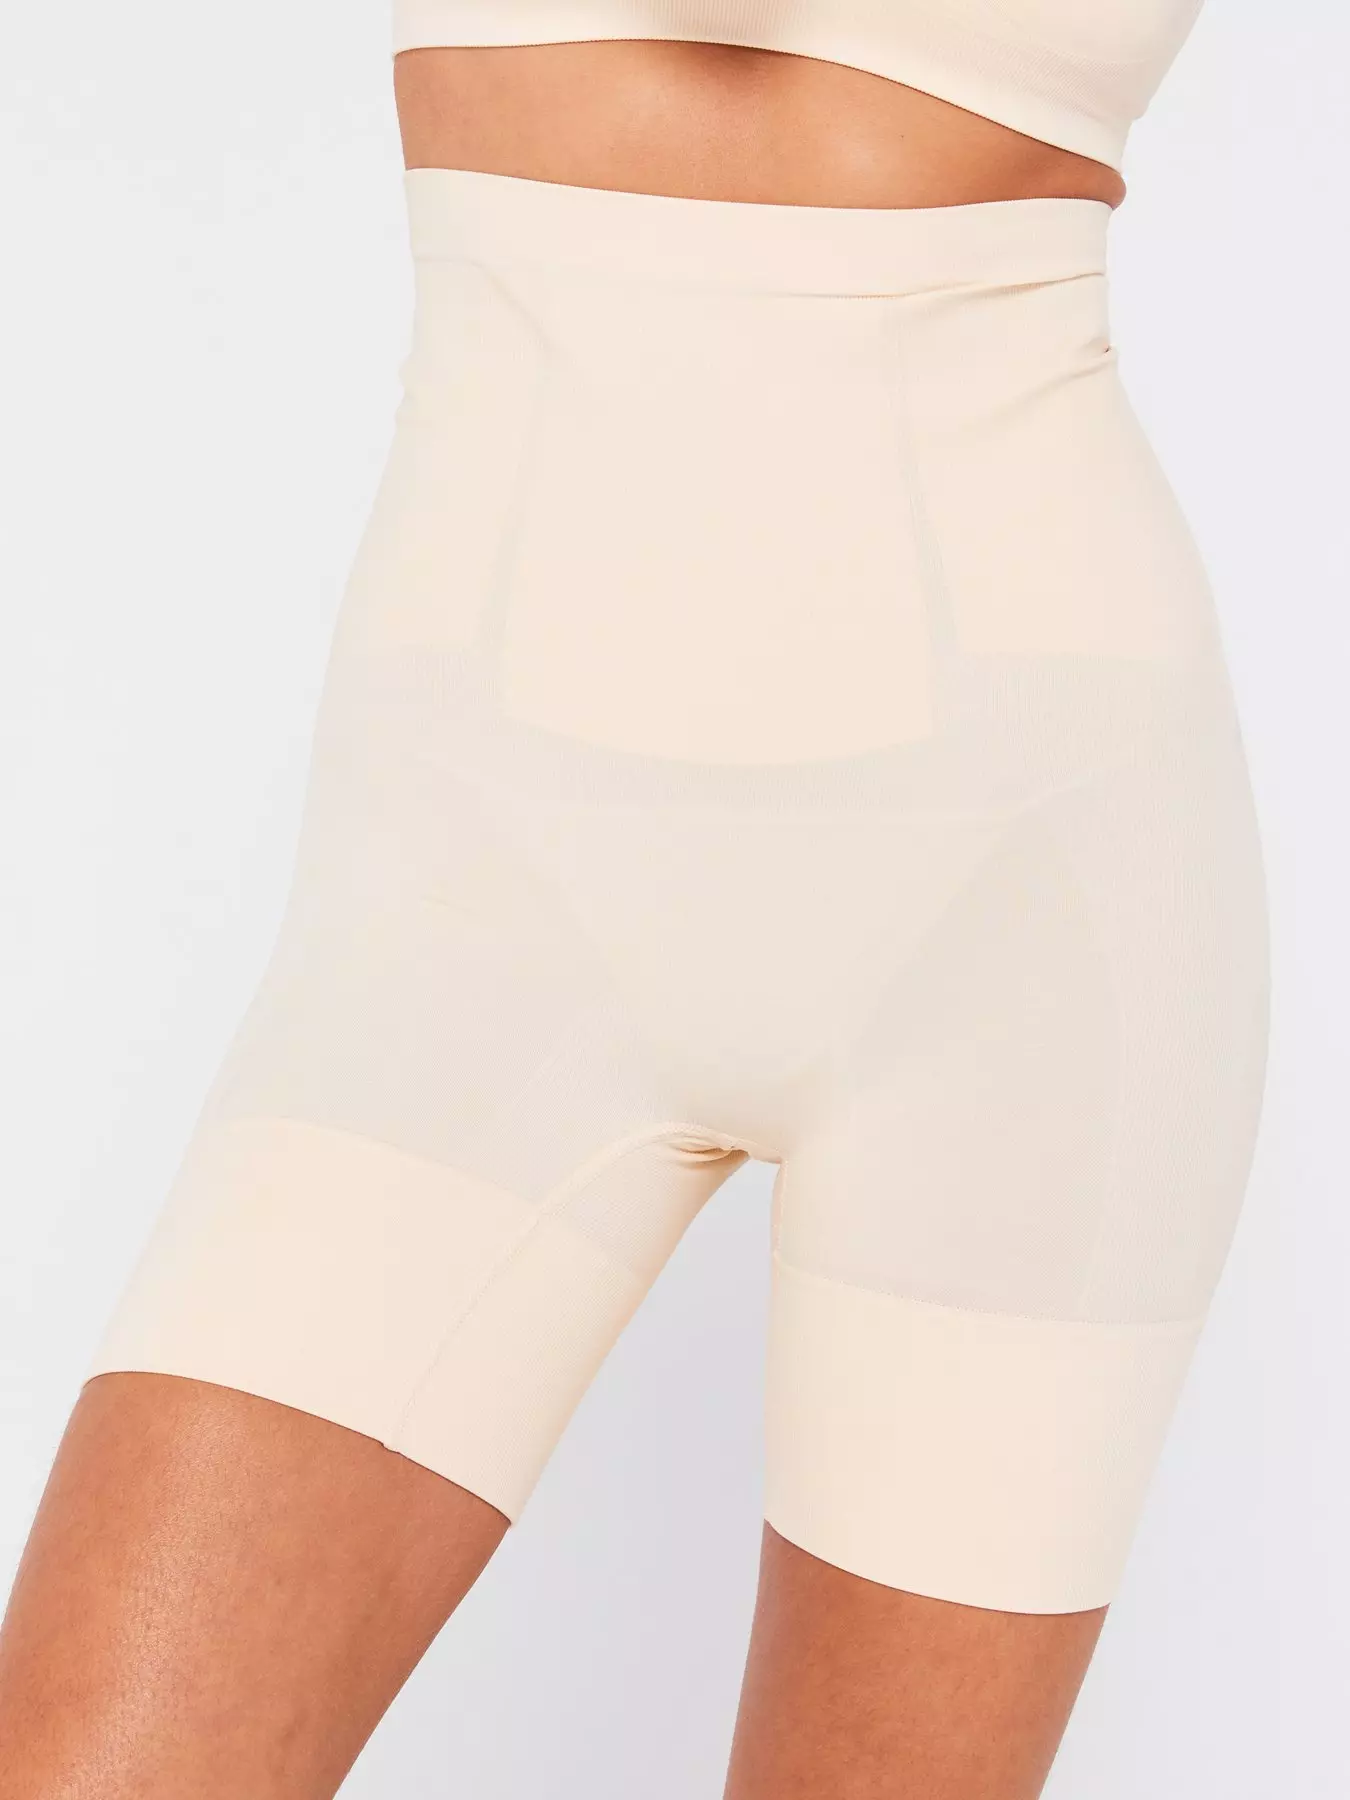 Cupid Women's 2-Pack Light Control Boy Short Shapewear with Tummy Panel 